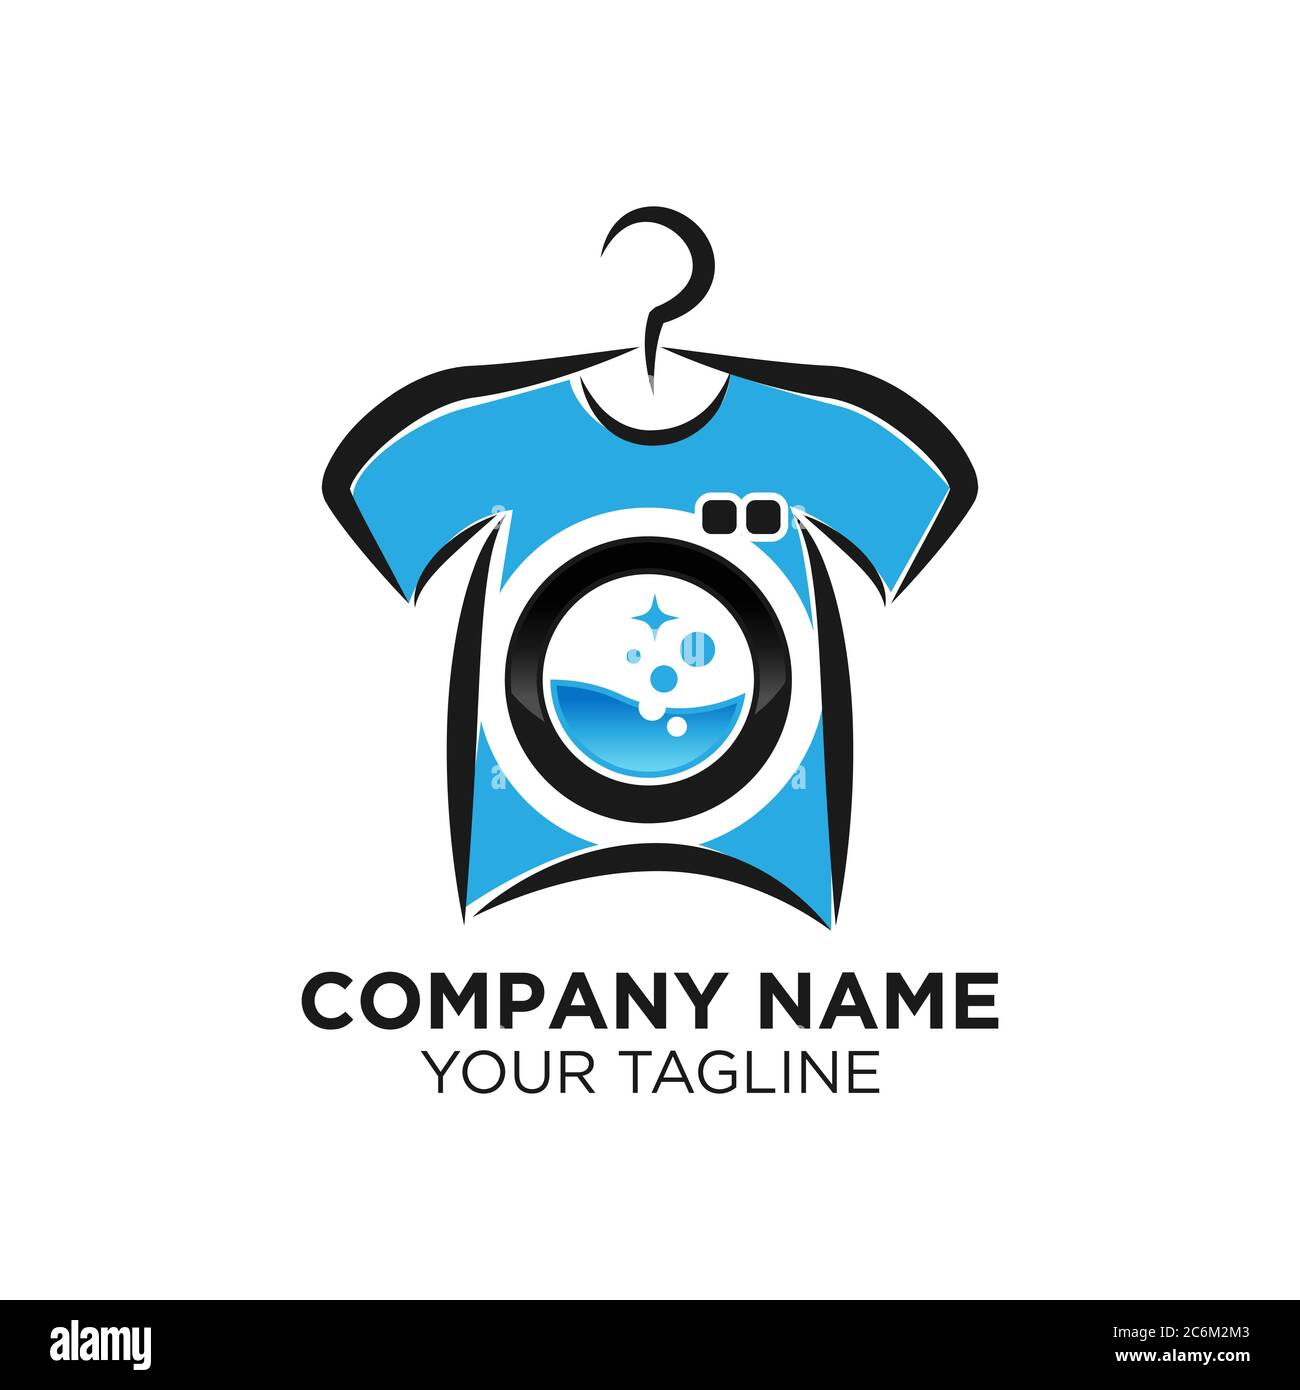 Washing Laundry Logo Template Design Vector, Emblem, Design Concept, Creative Symbol, Icon.EPS 10 Stock Vector